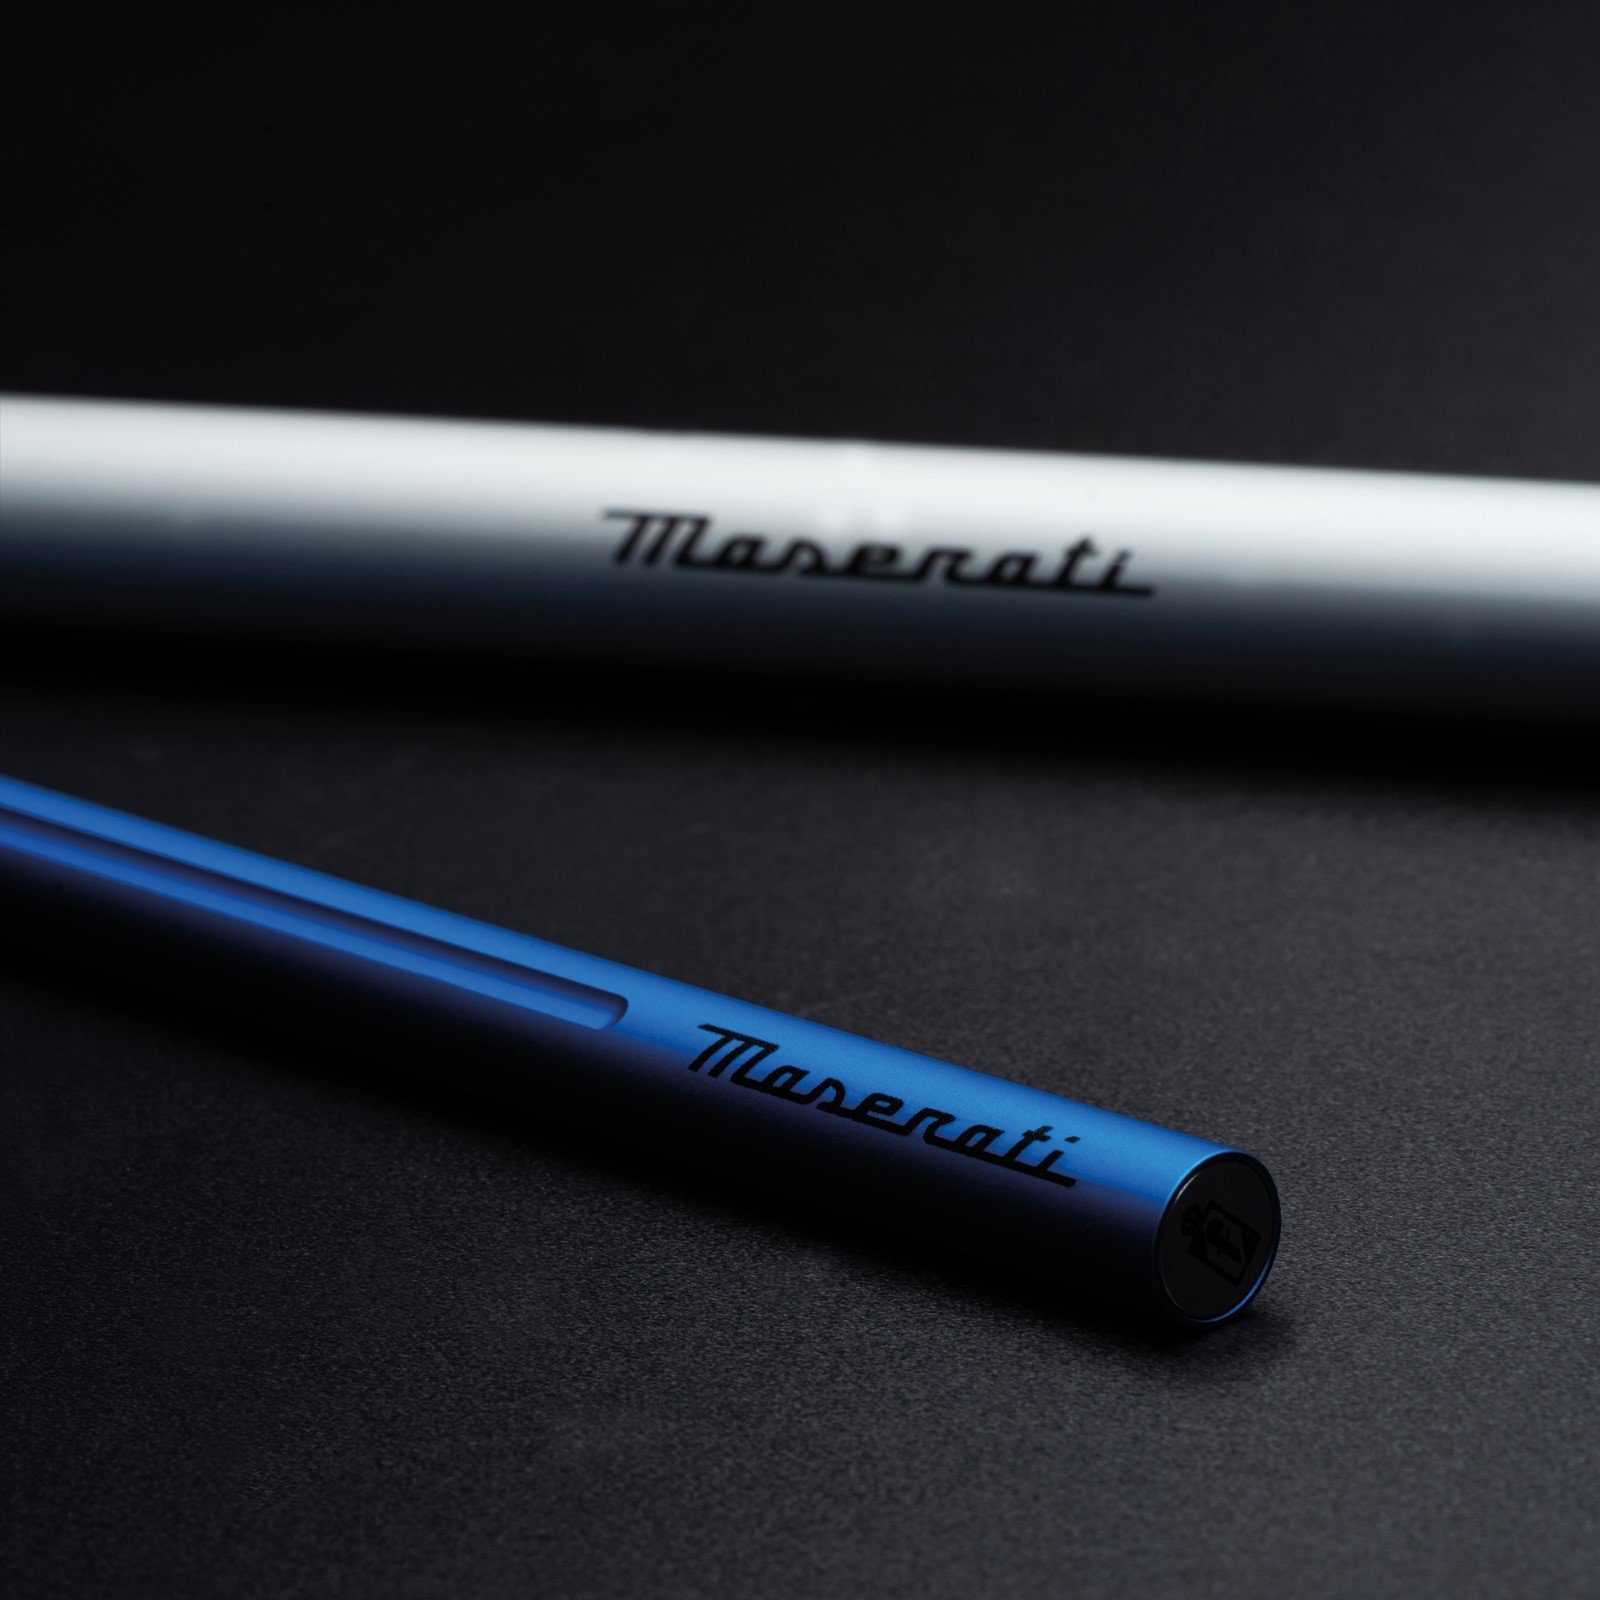 Pininfarina Bleistift Bleistift Smart Set) Bleier (kein Pencil Grafeex Schreibgerä, Pininfarina Blau Maserati